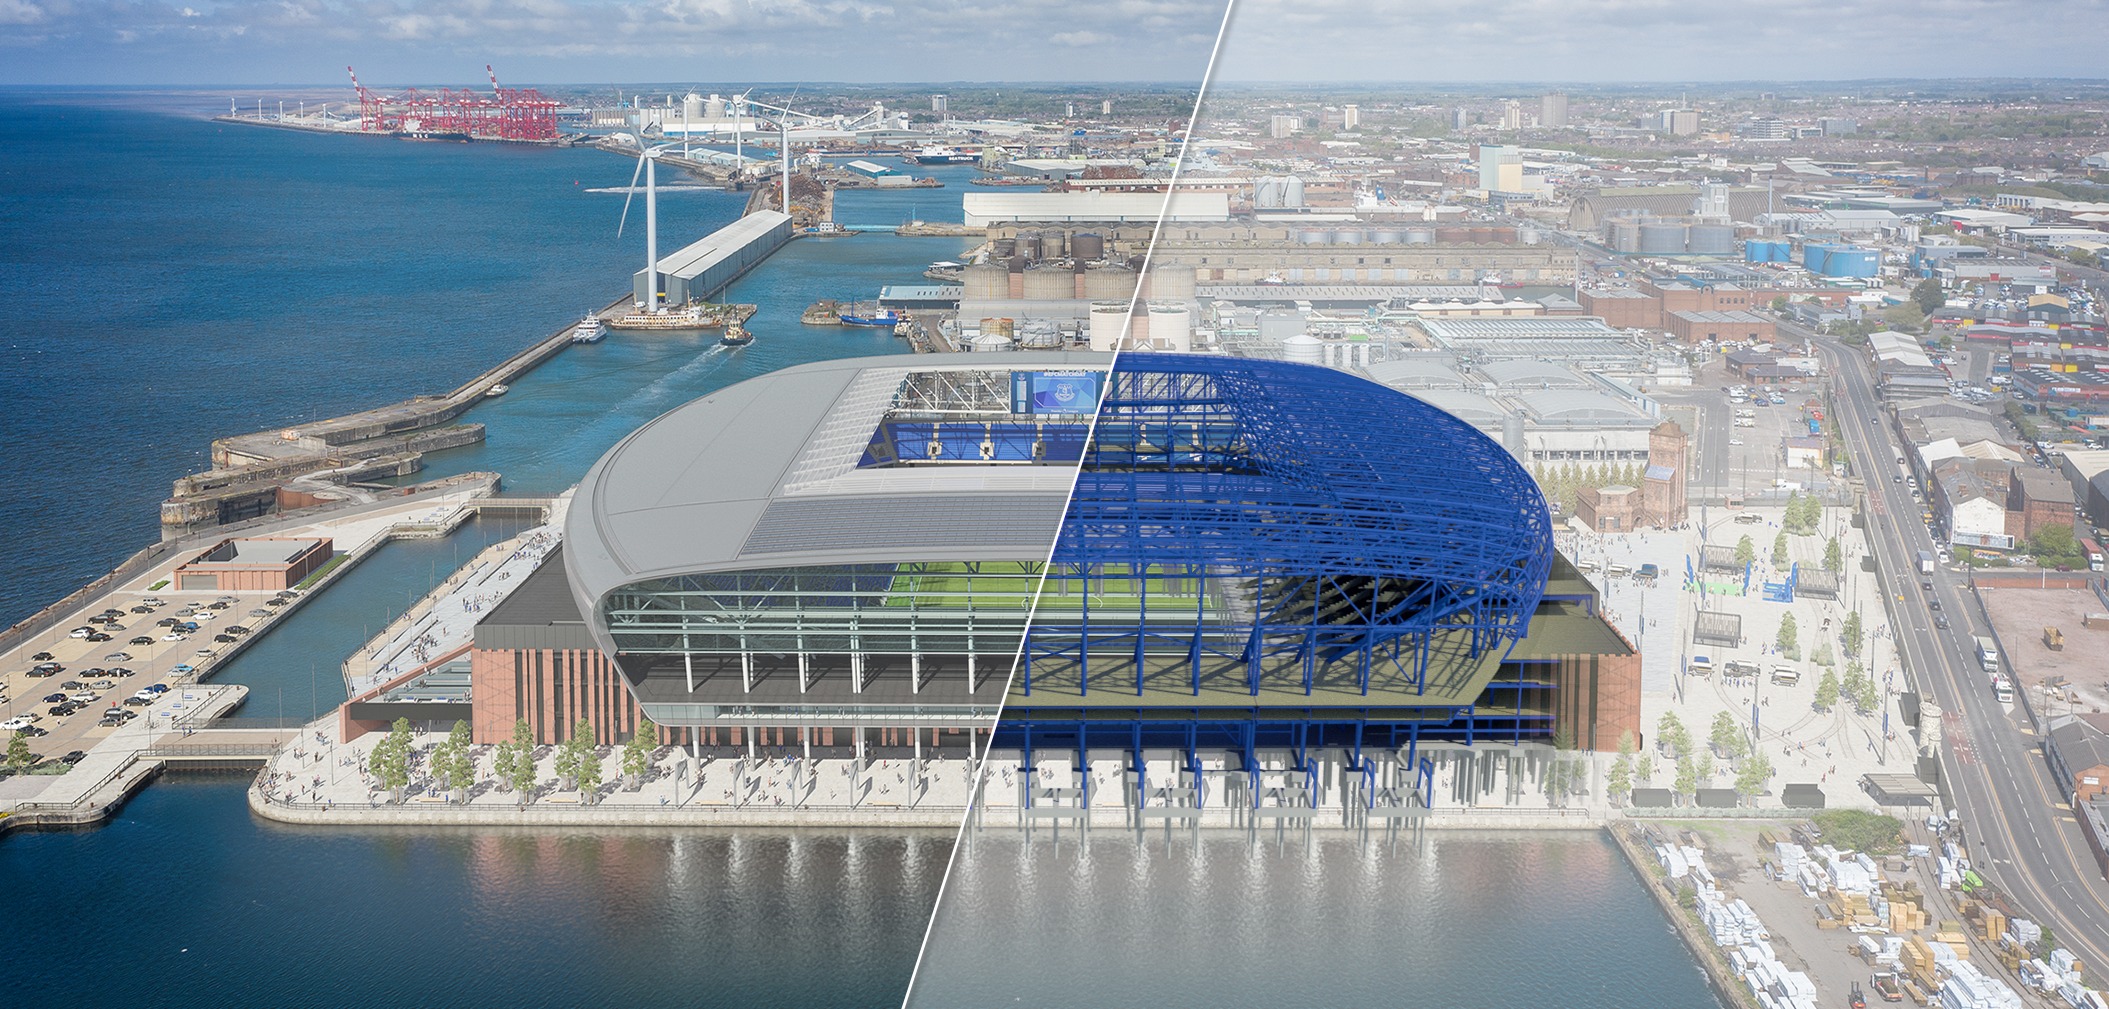 Engineering Everton FC’s new stadium to merge old and new | Stadia Magazine